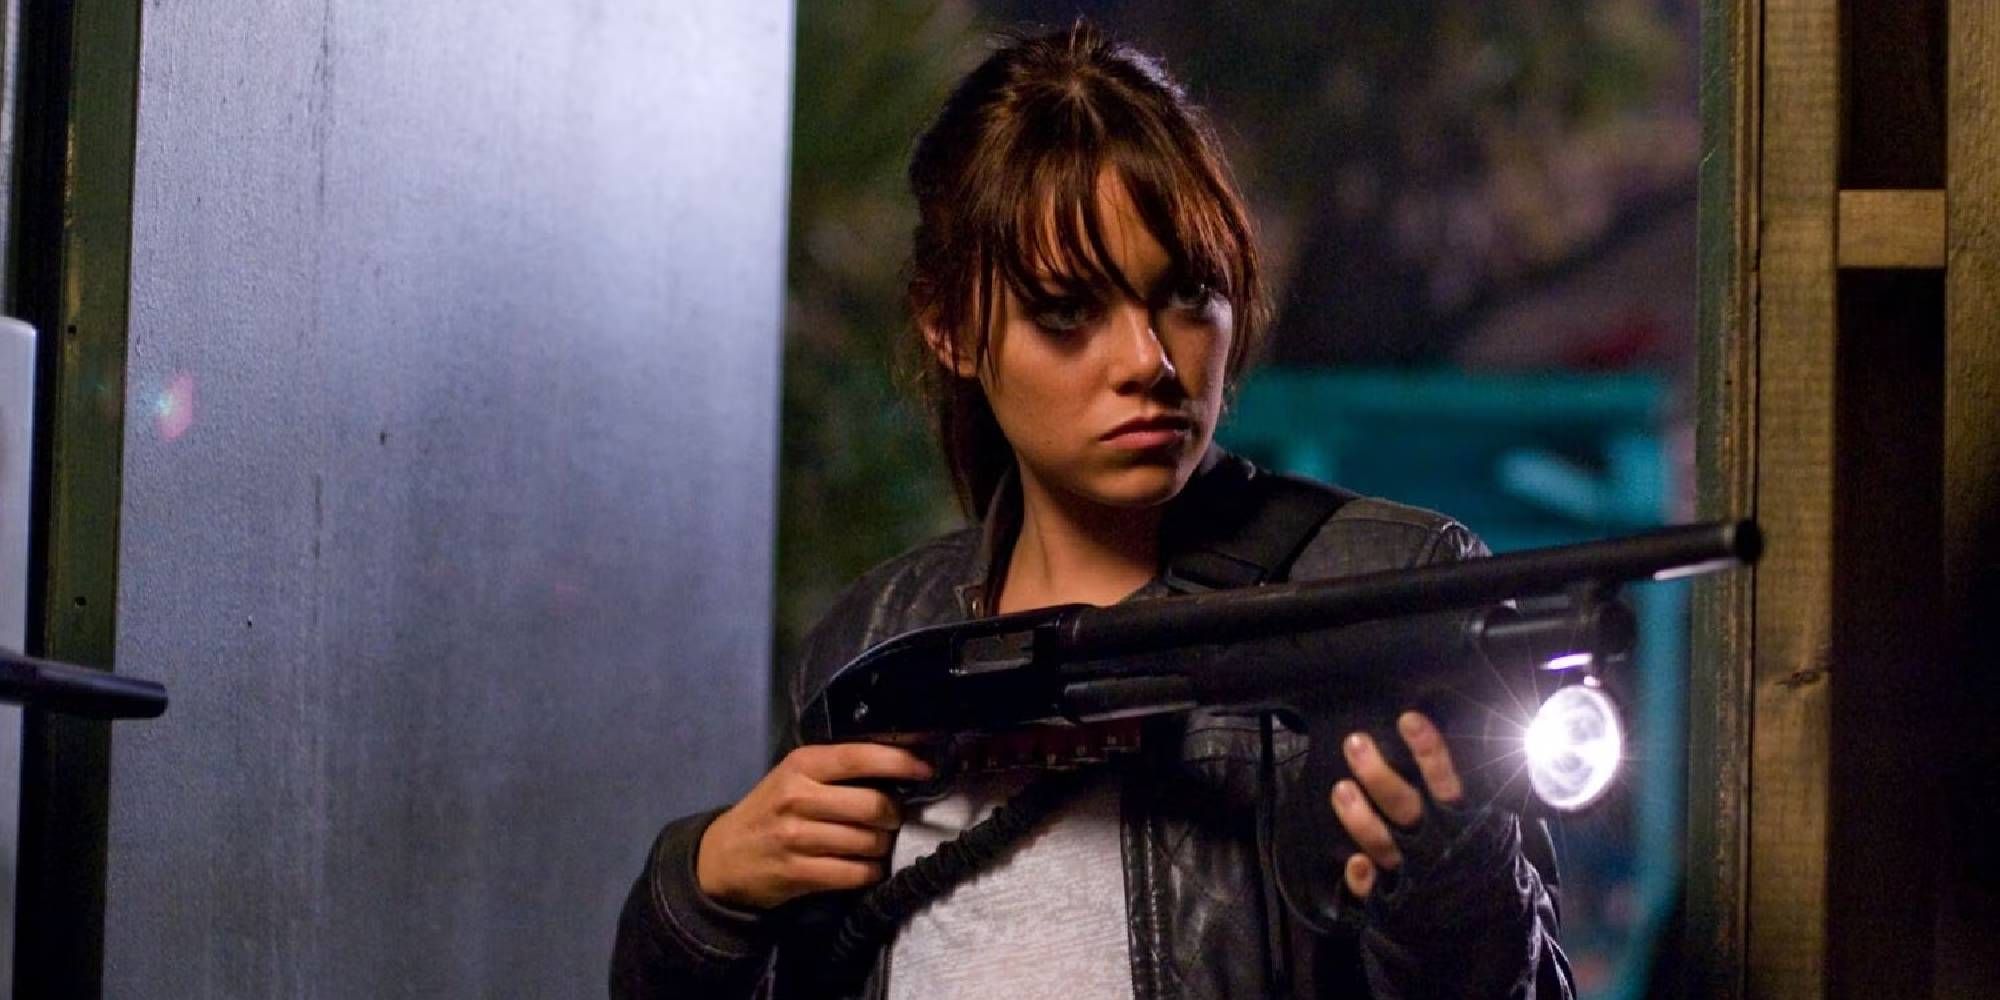 Emma Stone in Zombieland holding a gun.